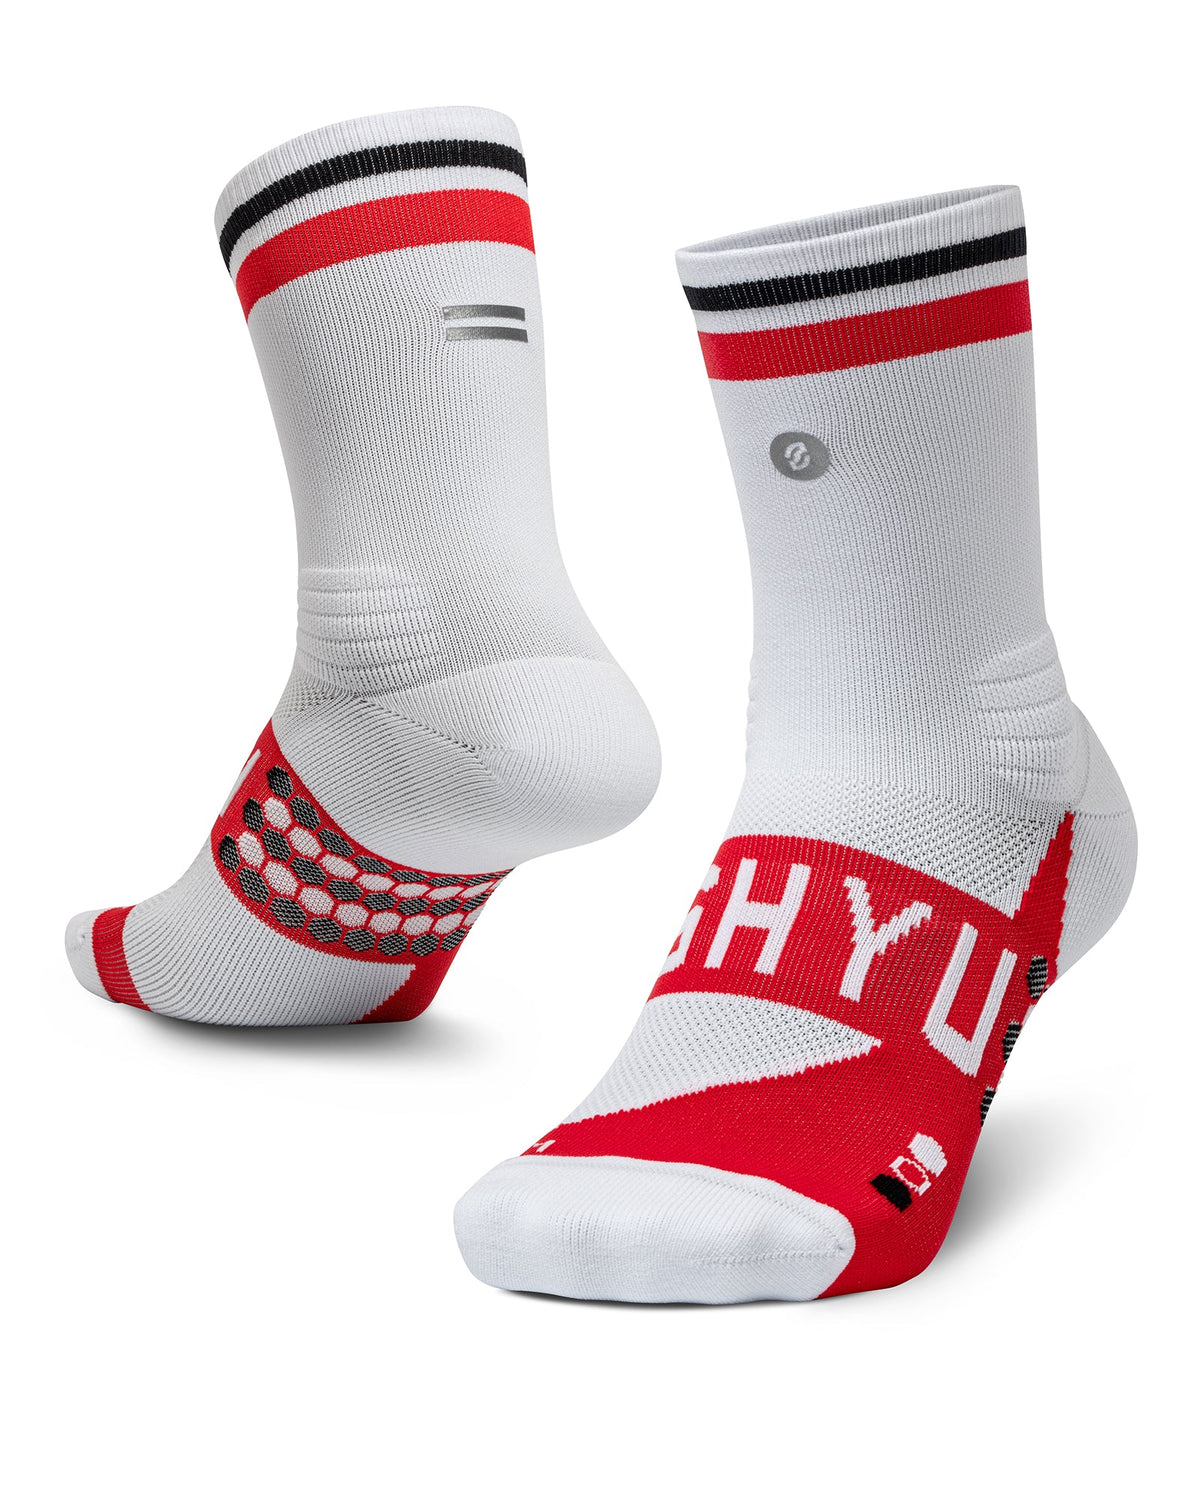 SHYU racing socks - white | red | black (small sizes)